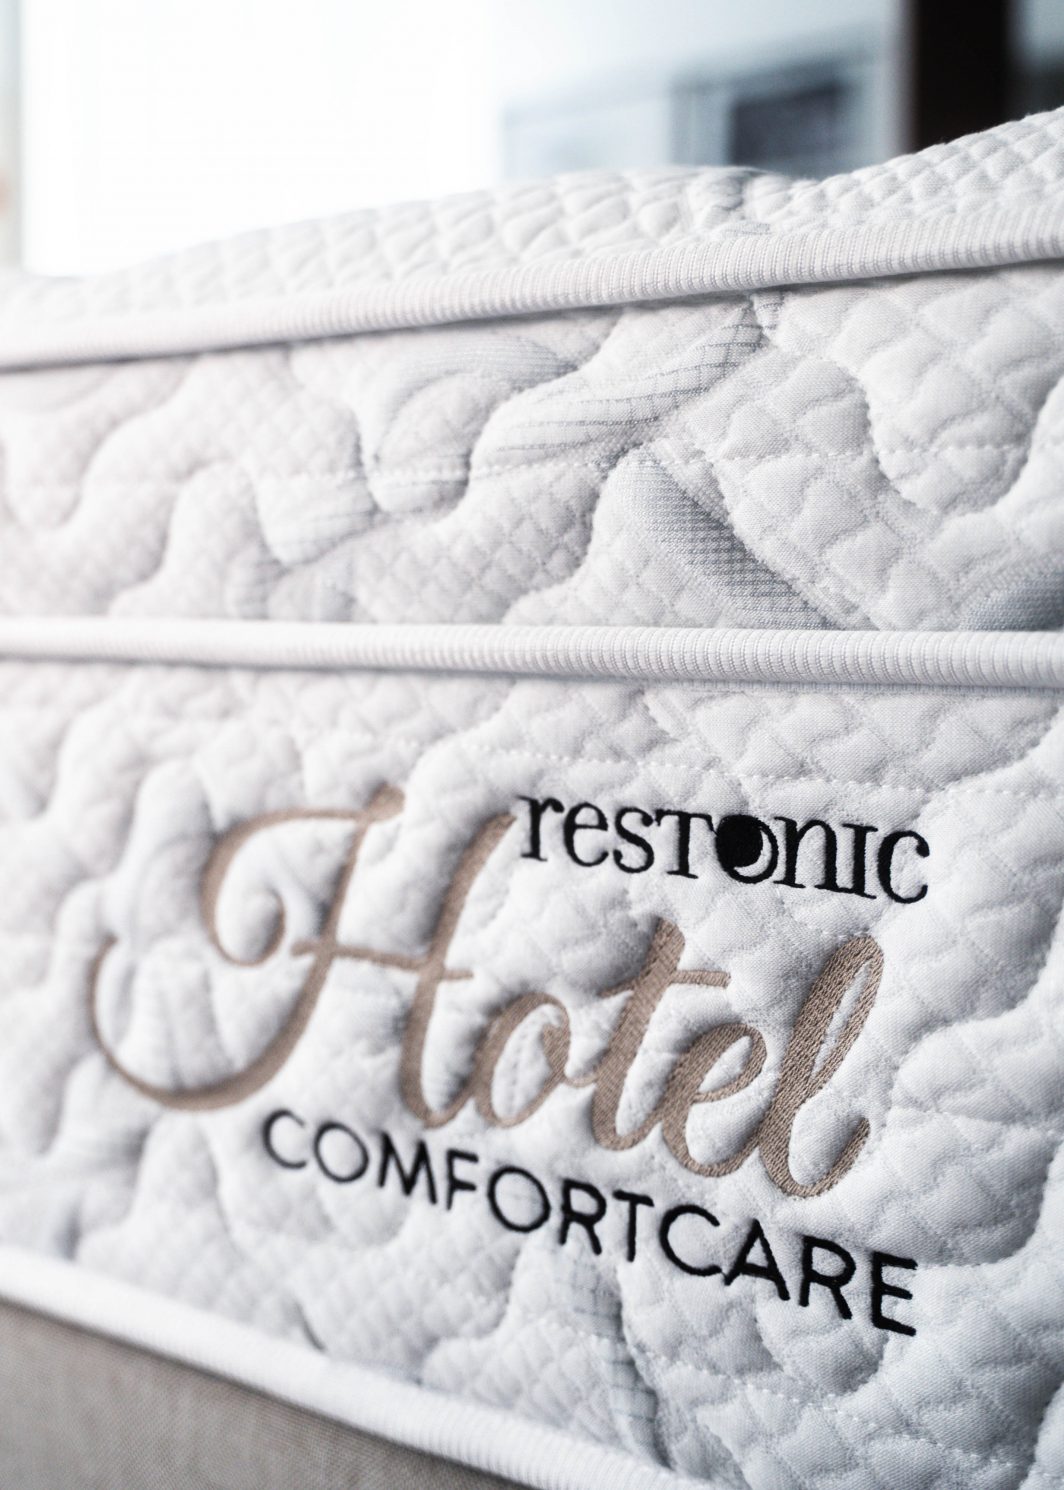 Hotel Comfort Care Mattress